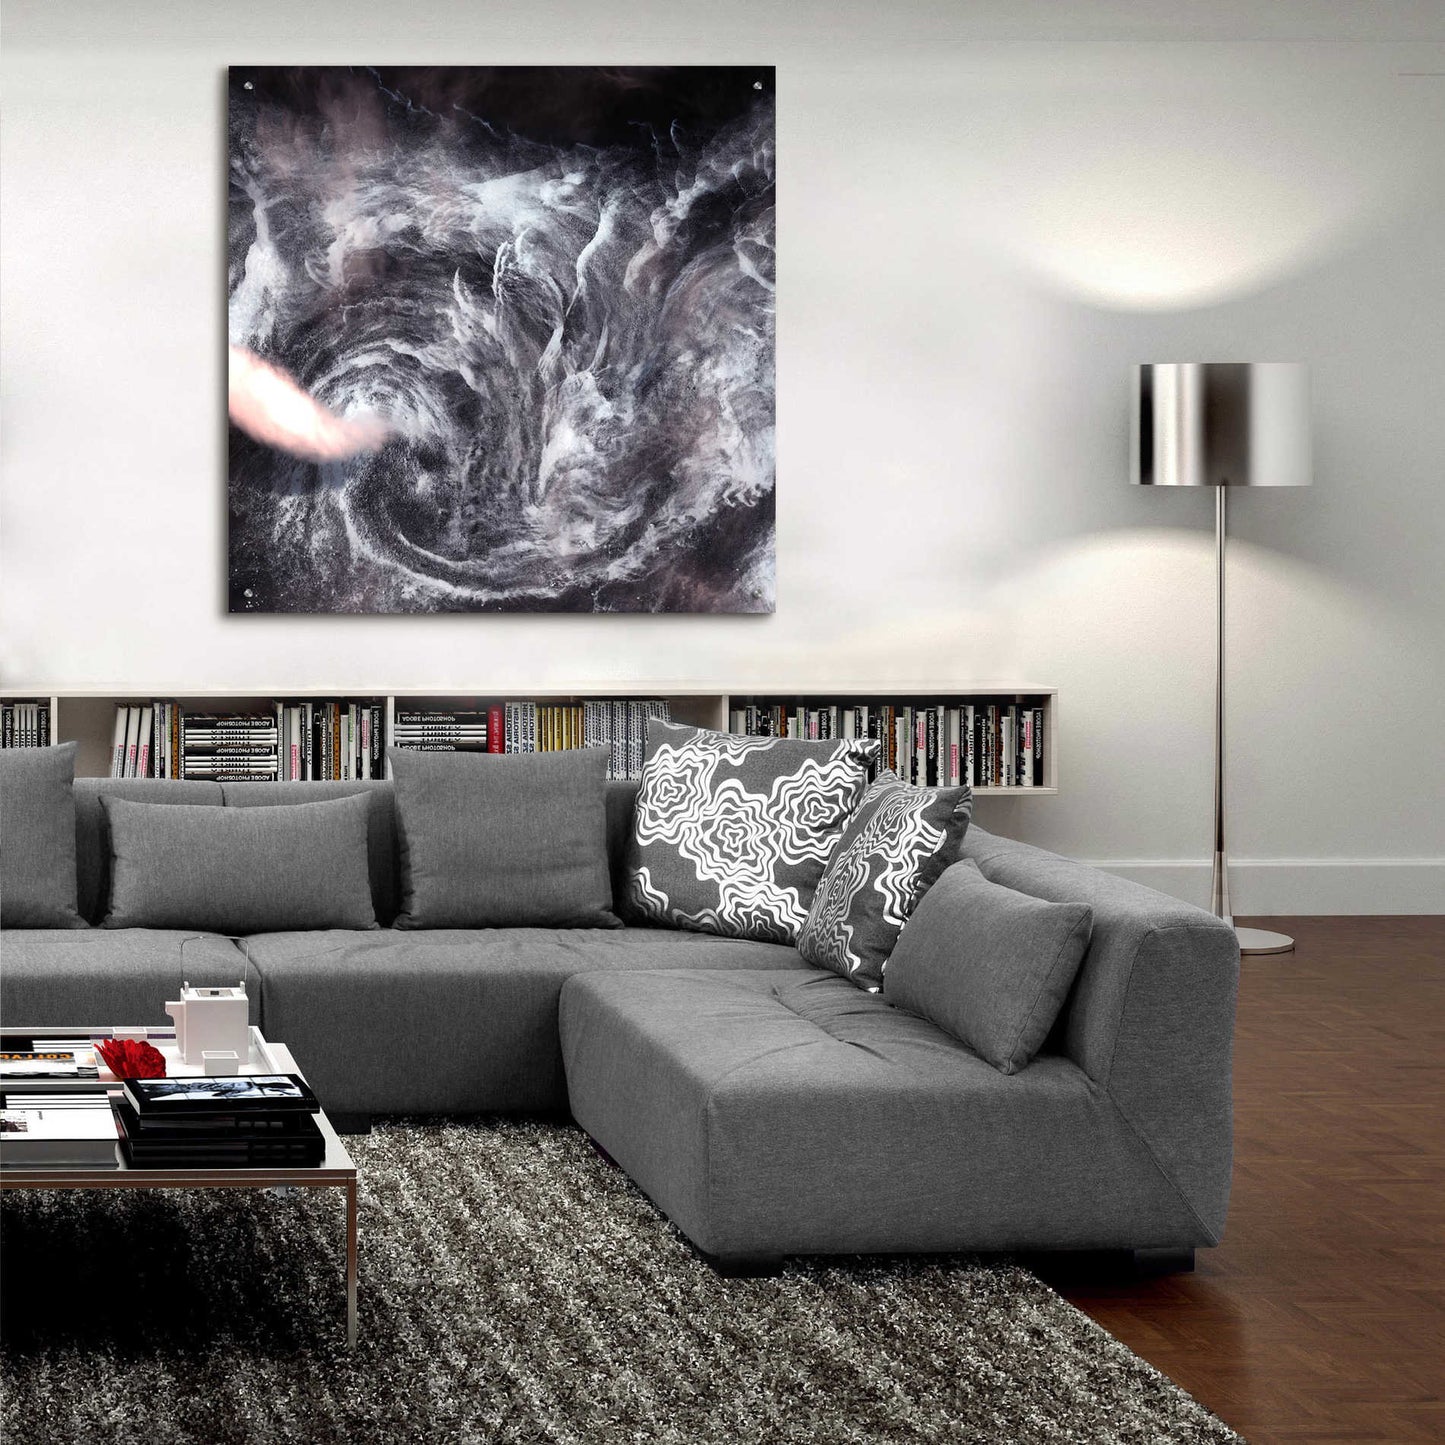 Epic Art 'Earth as Art: Whirlpool in the Air' Acrylic Glass Wall Art,36x36